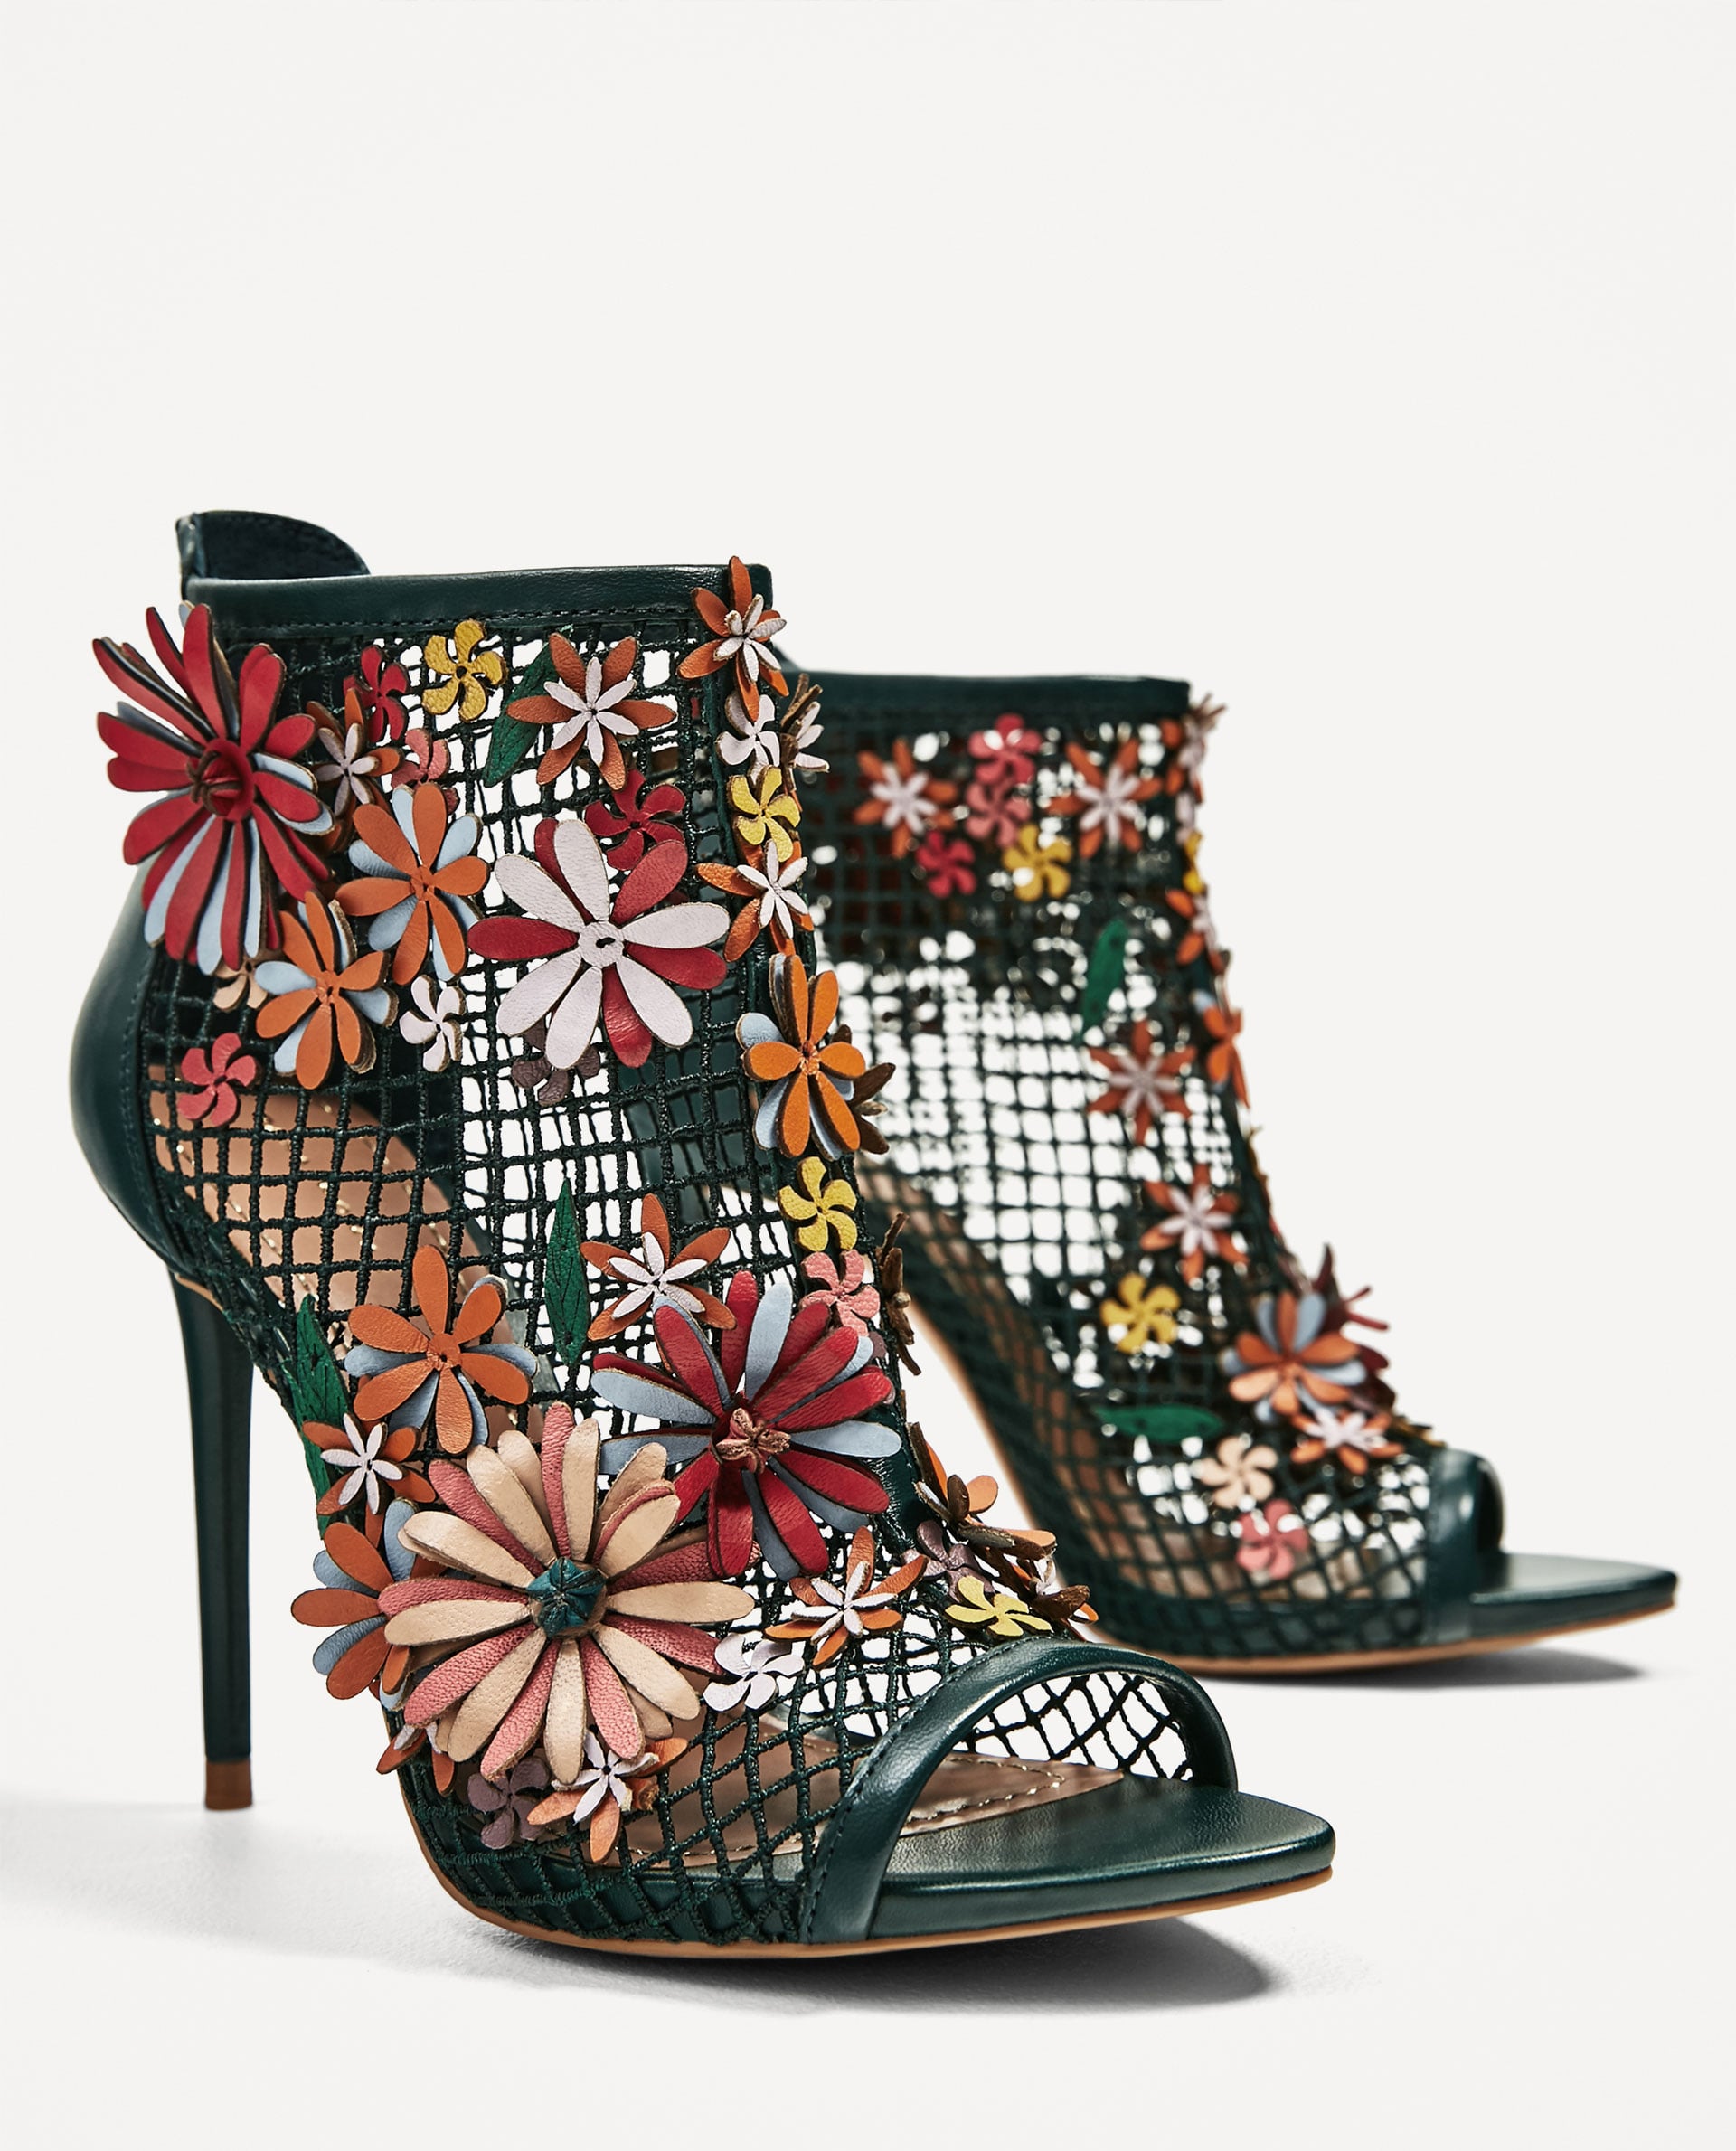 Zara's Floral Mesh Sandals ($139) marry 